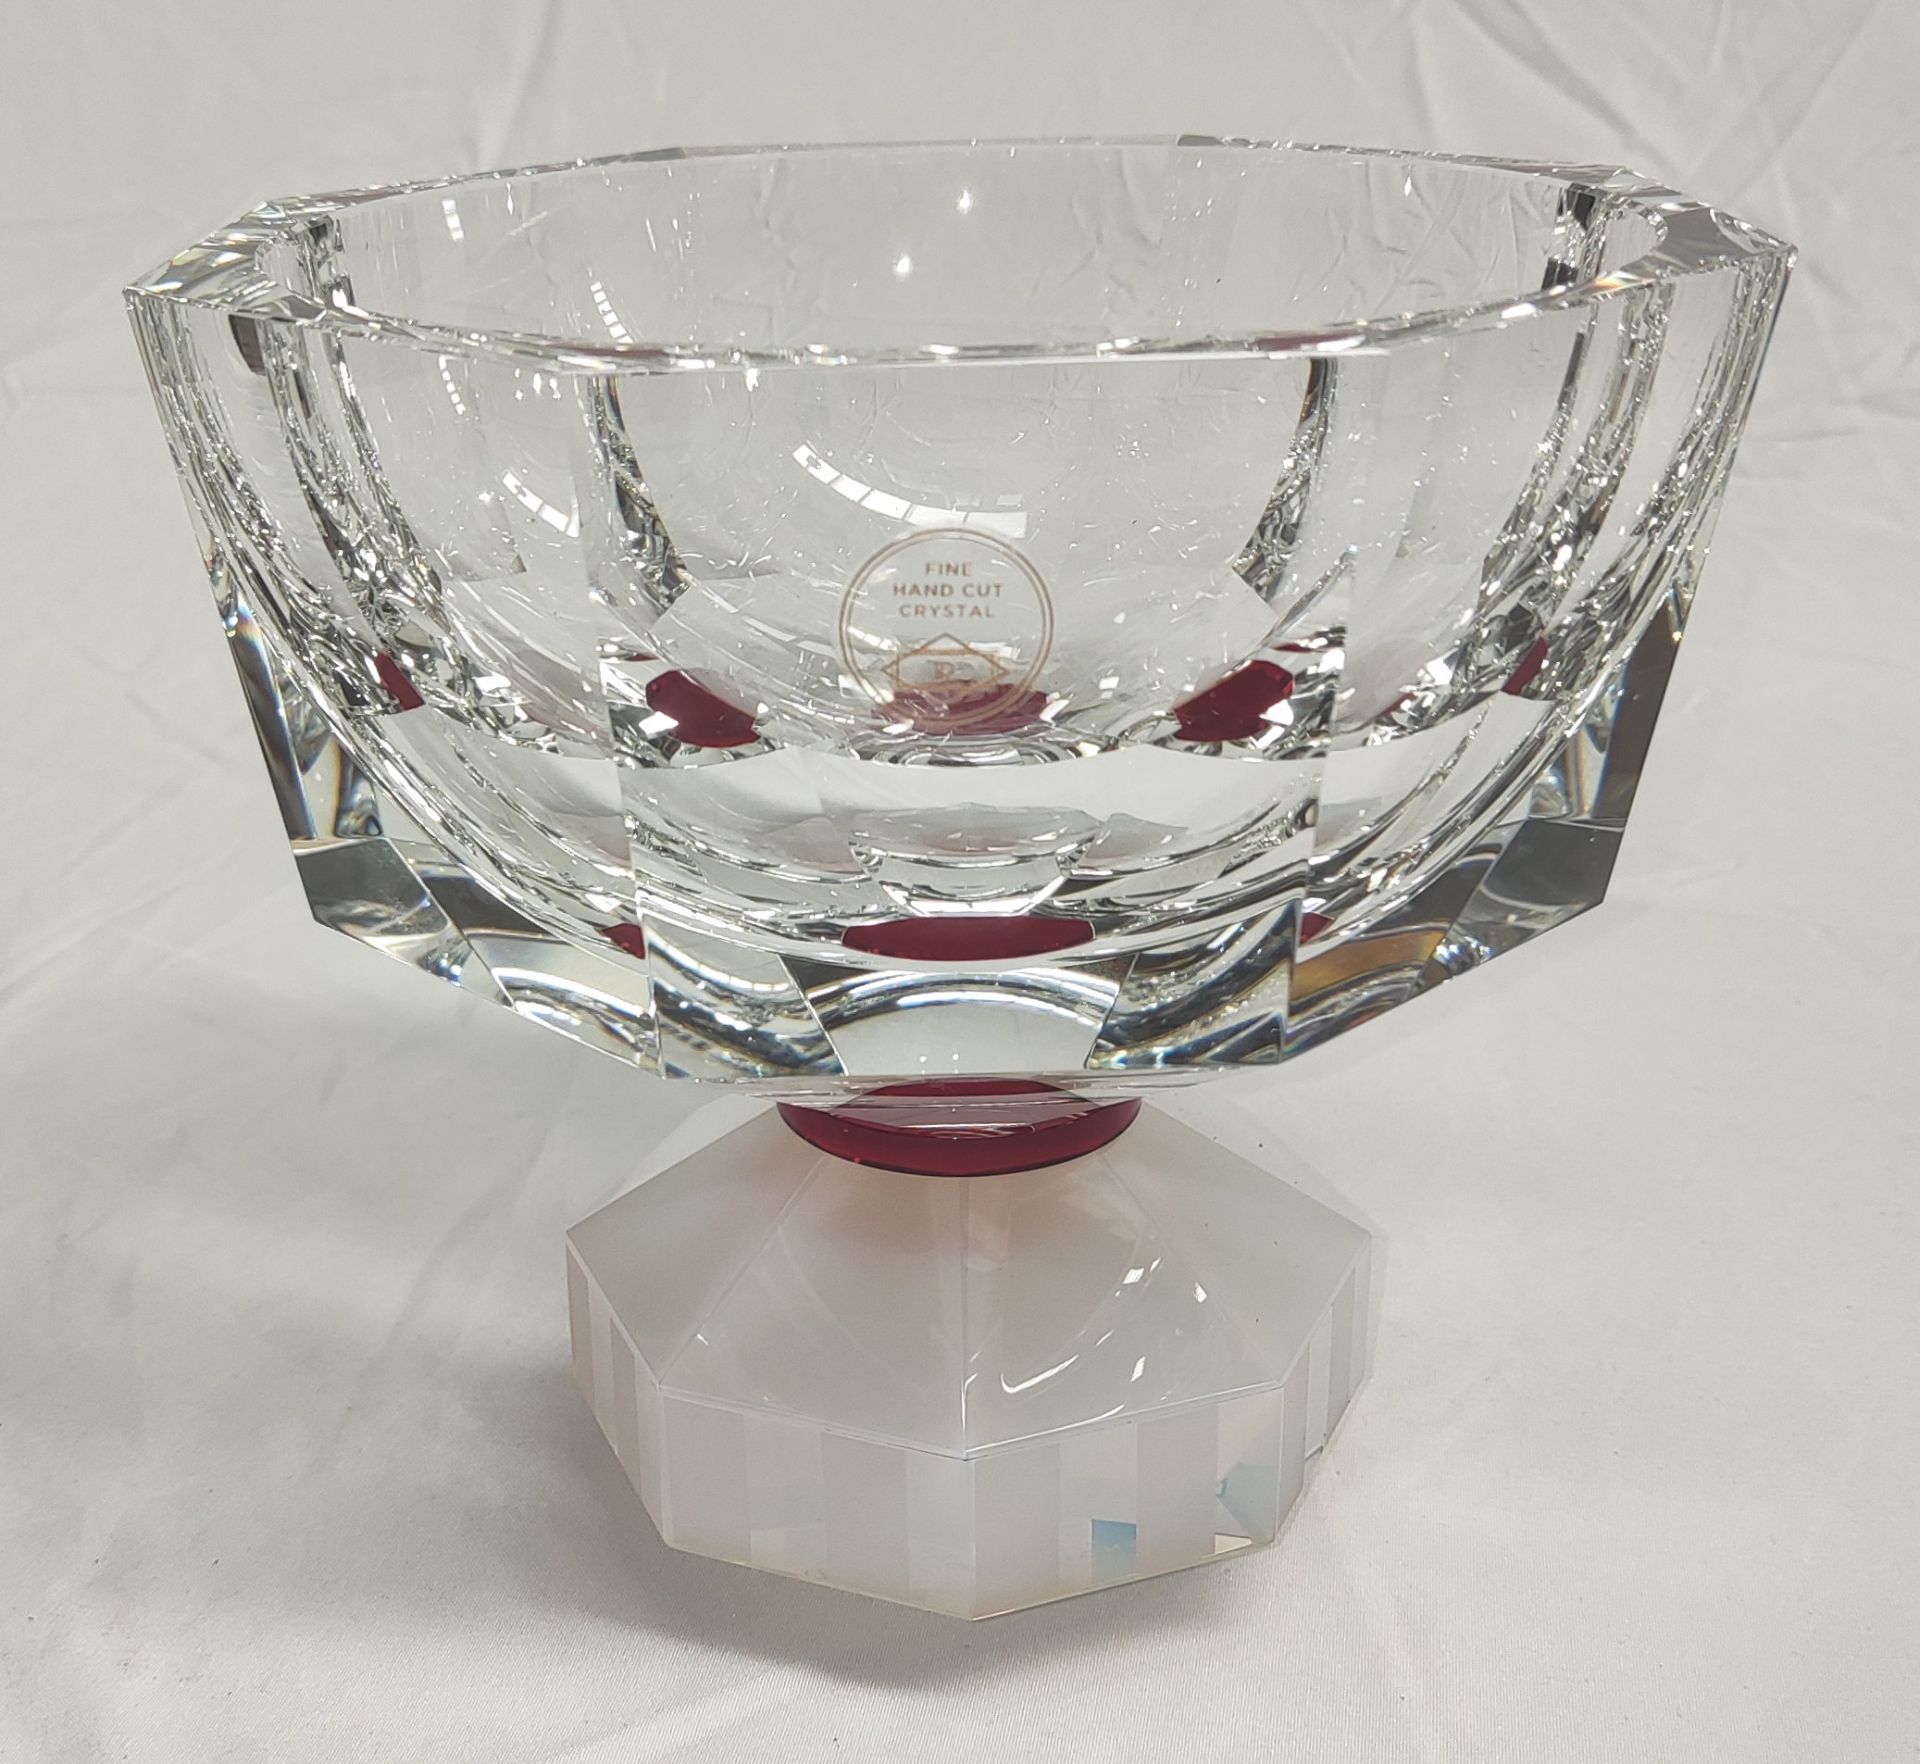 1 x REFLECTIONS COPENHAGEN Halifax Hand-Cut Crystal Glass Bowl In Clear/Milk/Plum - Original RRP £ - Image 11 of 21